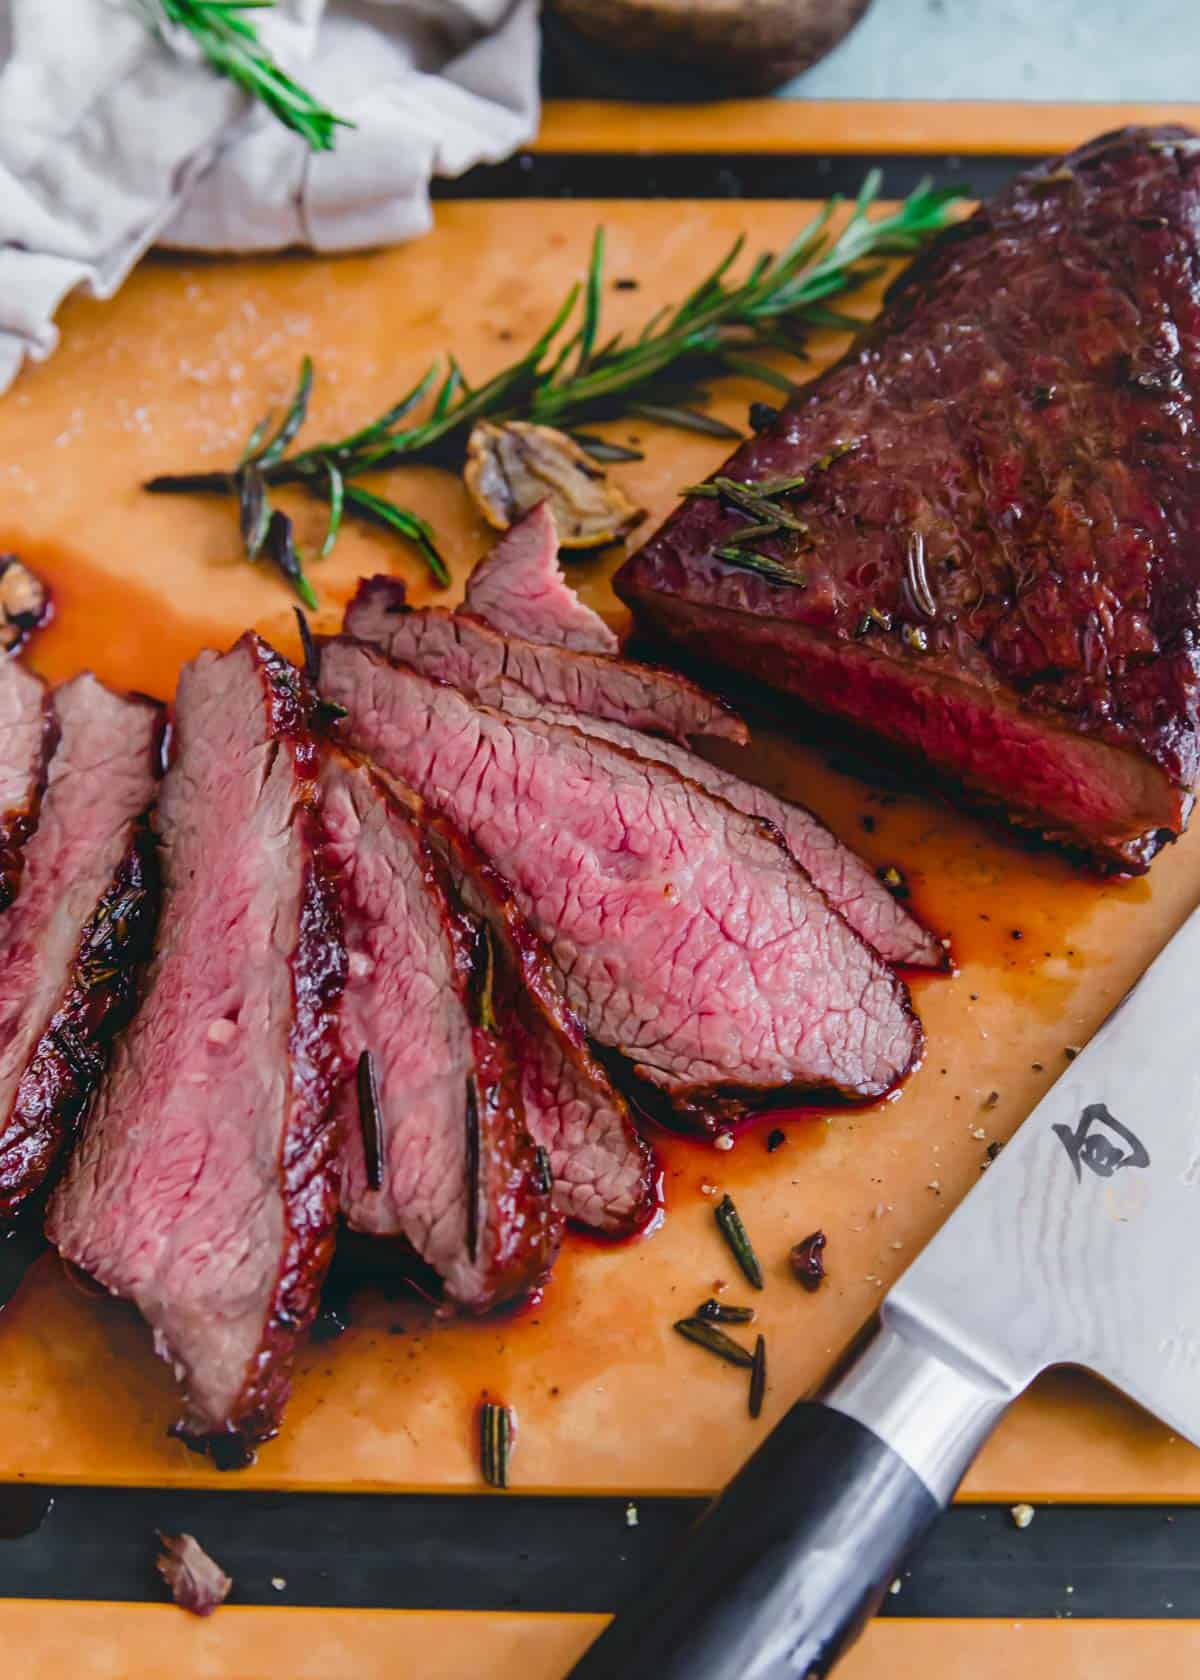 Tri tip steak cut against the grain in thin slices on a cutting board.